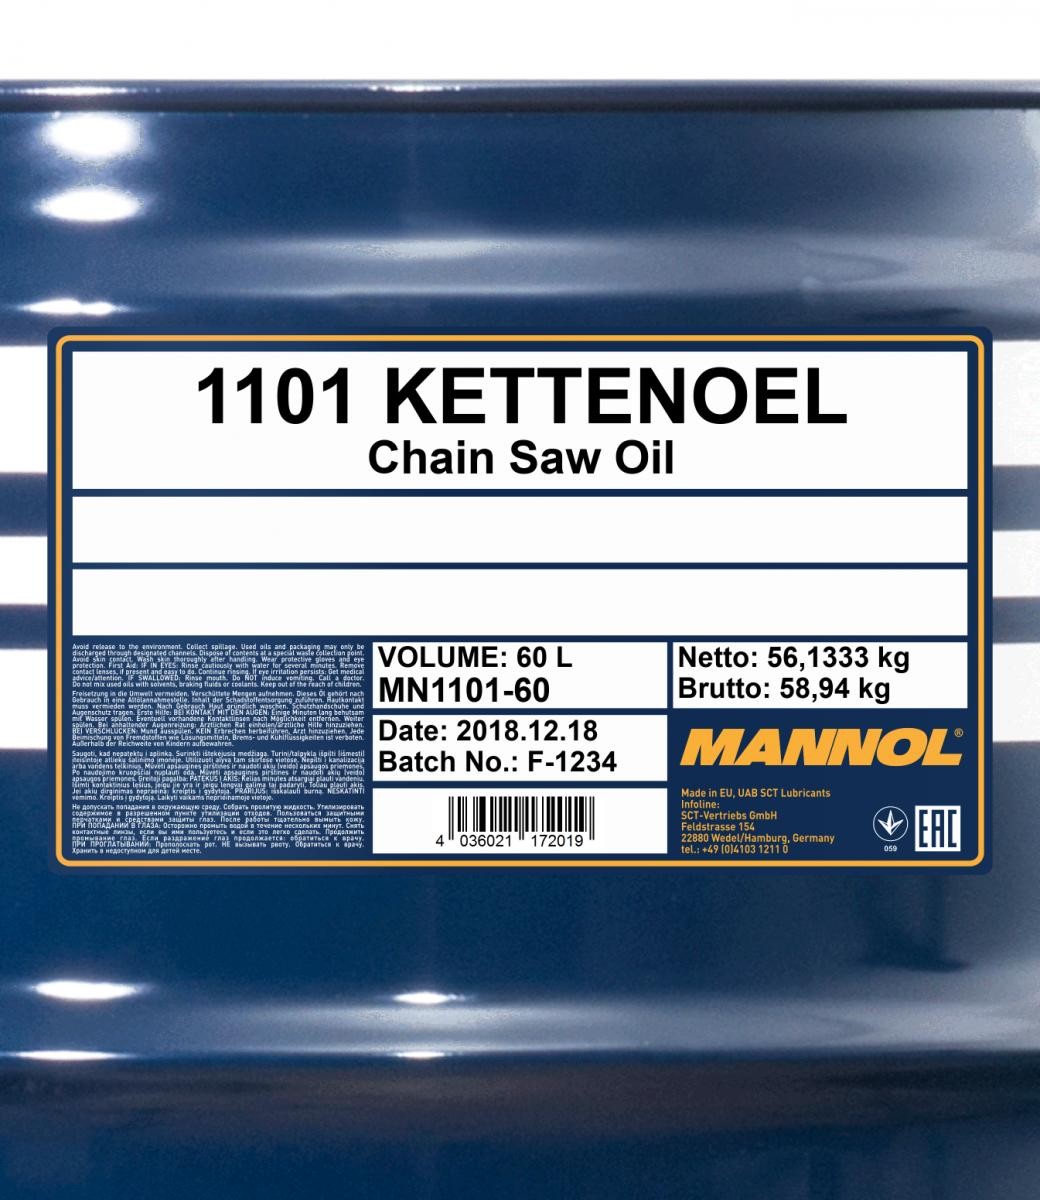 Mannol 1101 Kettenöl Sägekettenöl 60 Liter